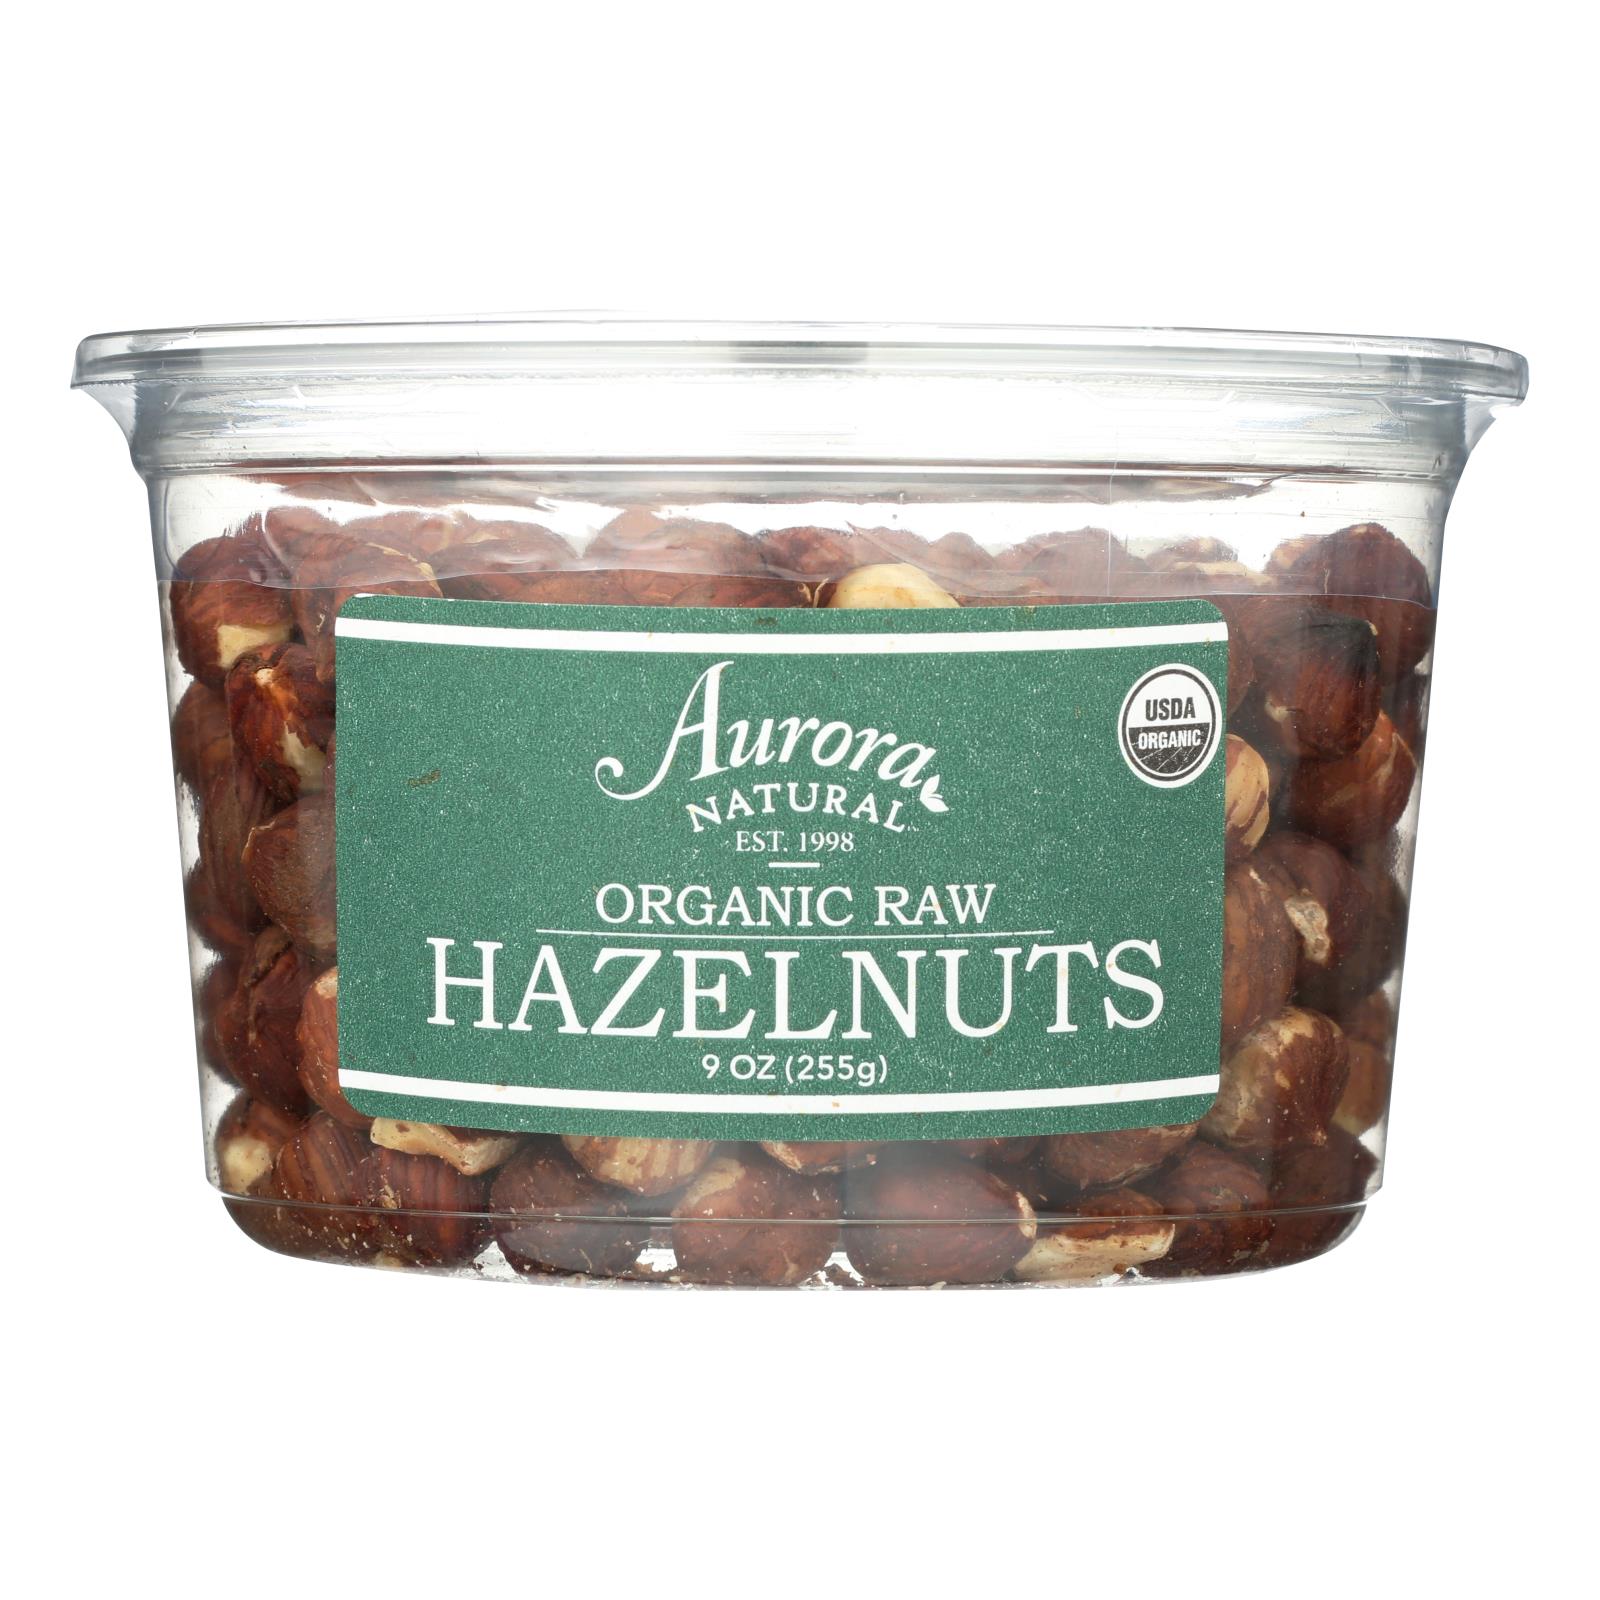 Aurora Natural Products - Organic Raw Hazelnuts - 12개 묶음상품 - 9 oz.